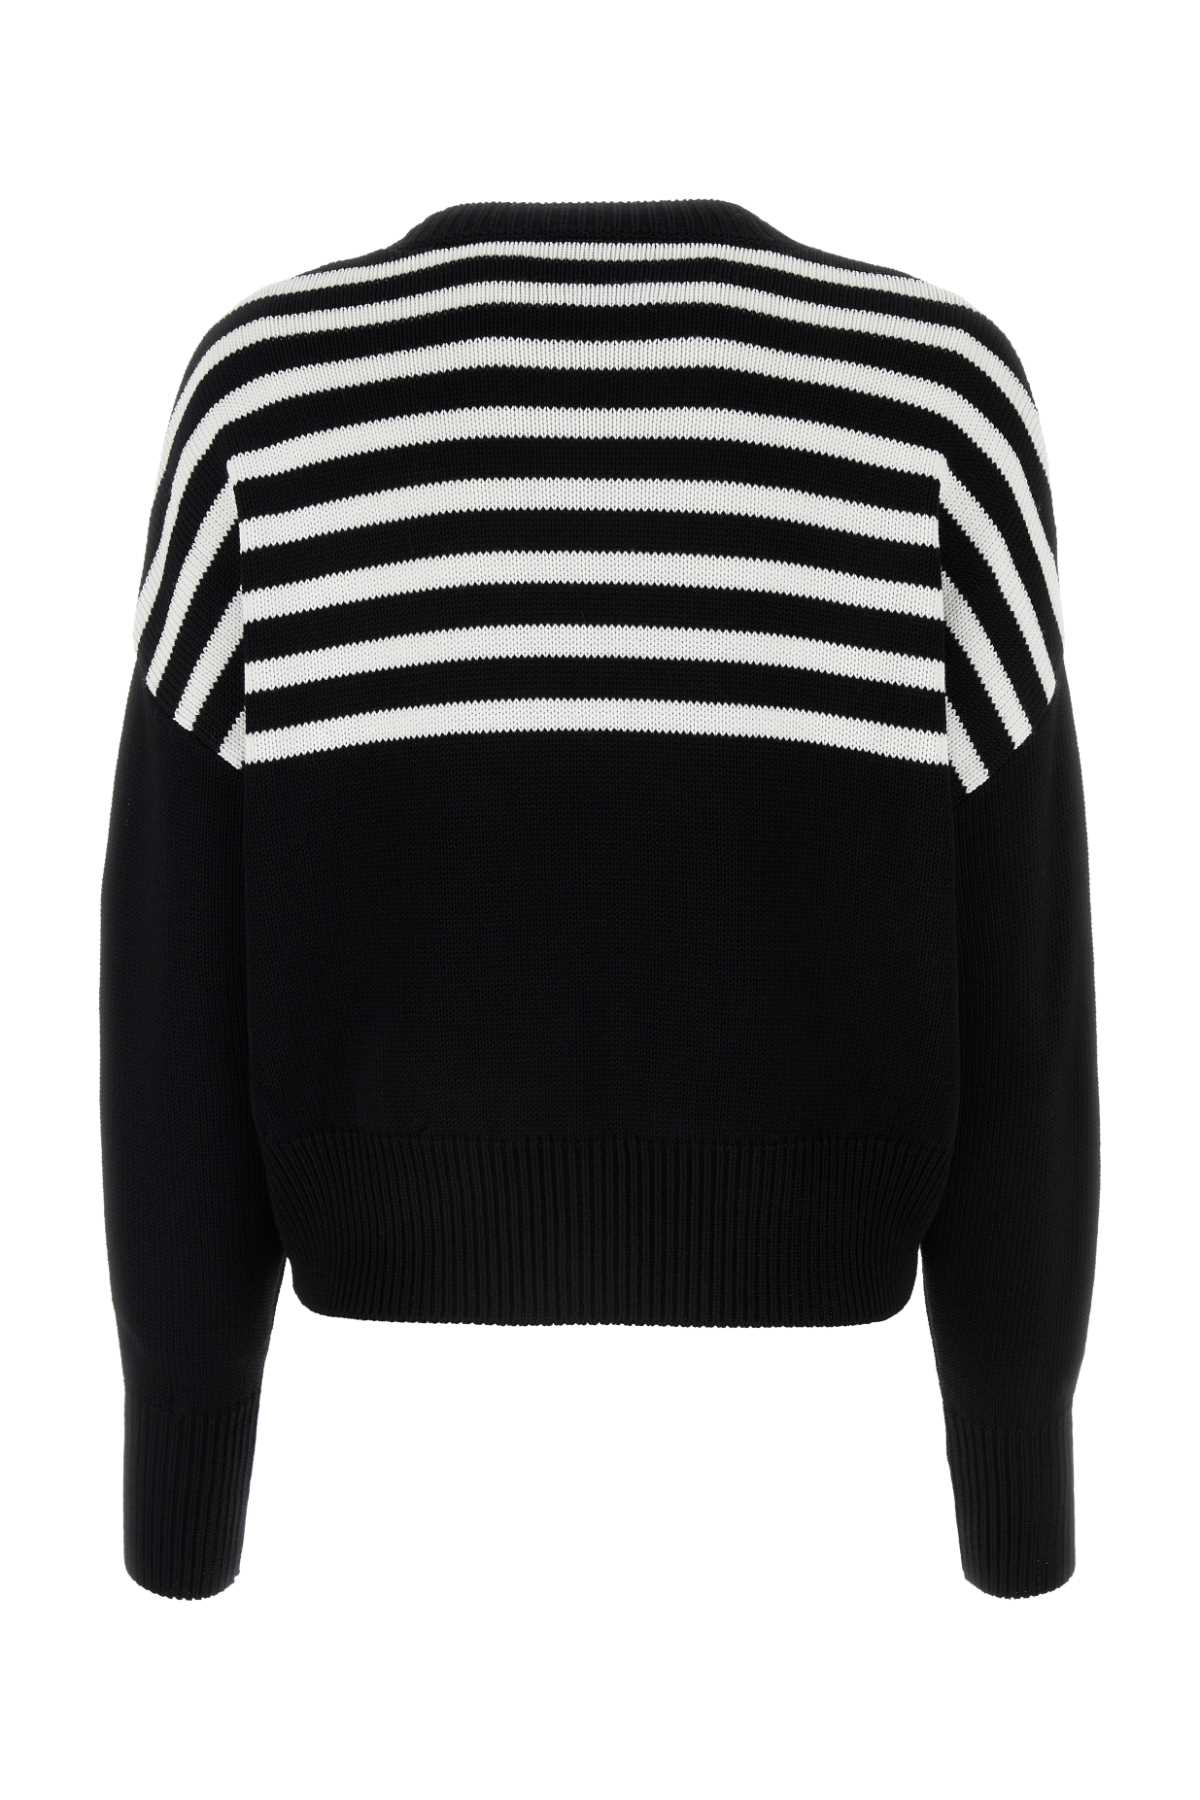 Givenchy Black Viscose Blend Oversize Sweater